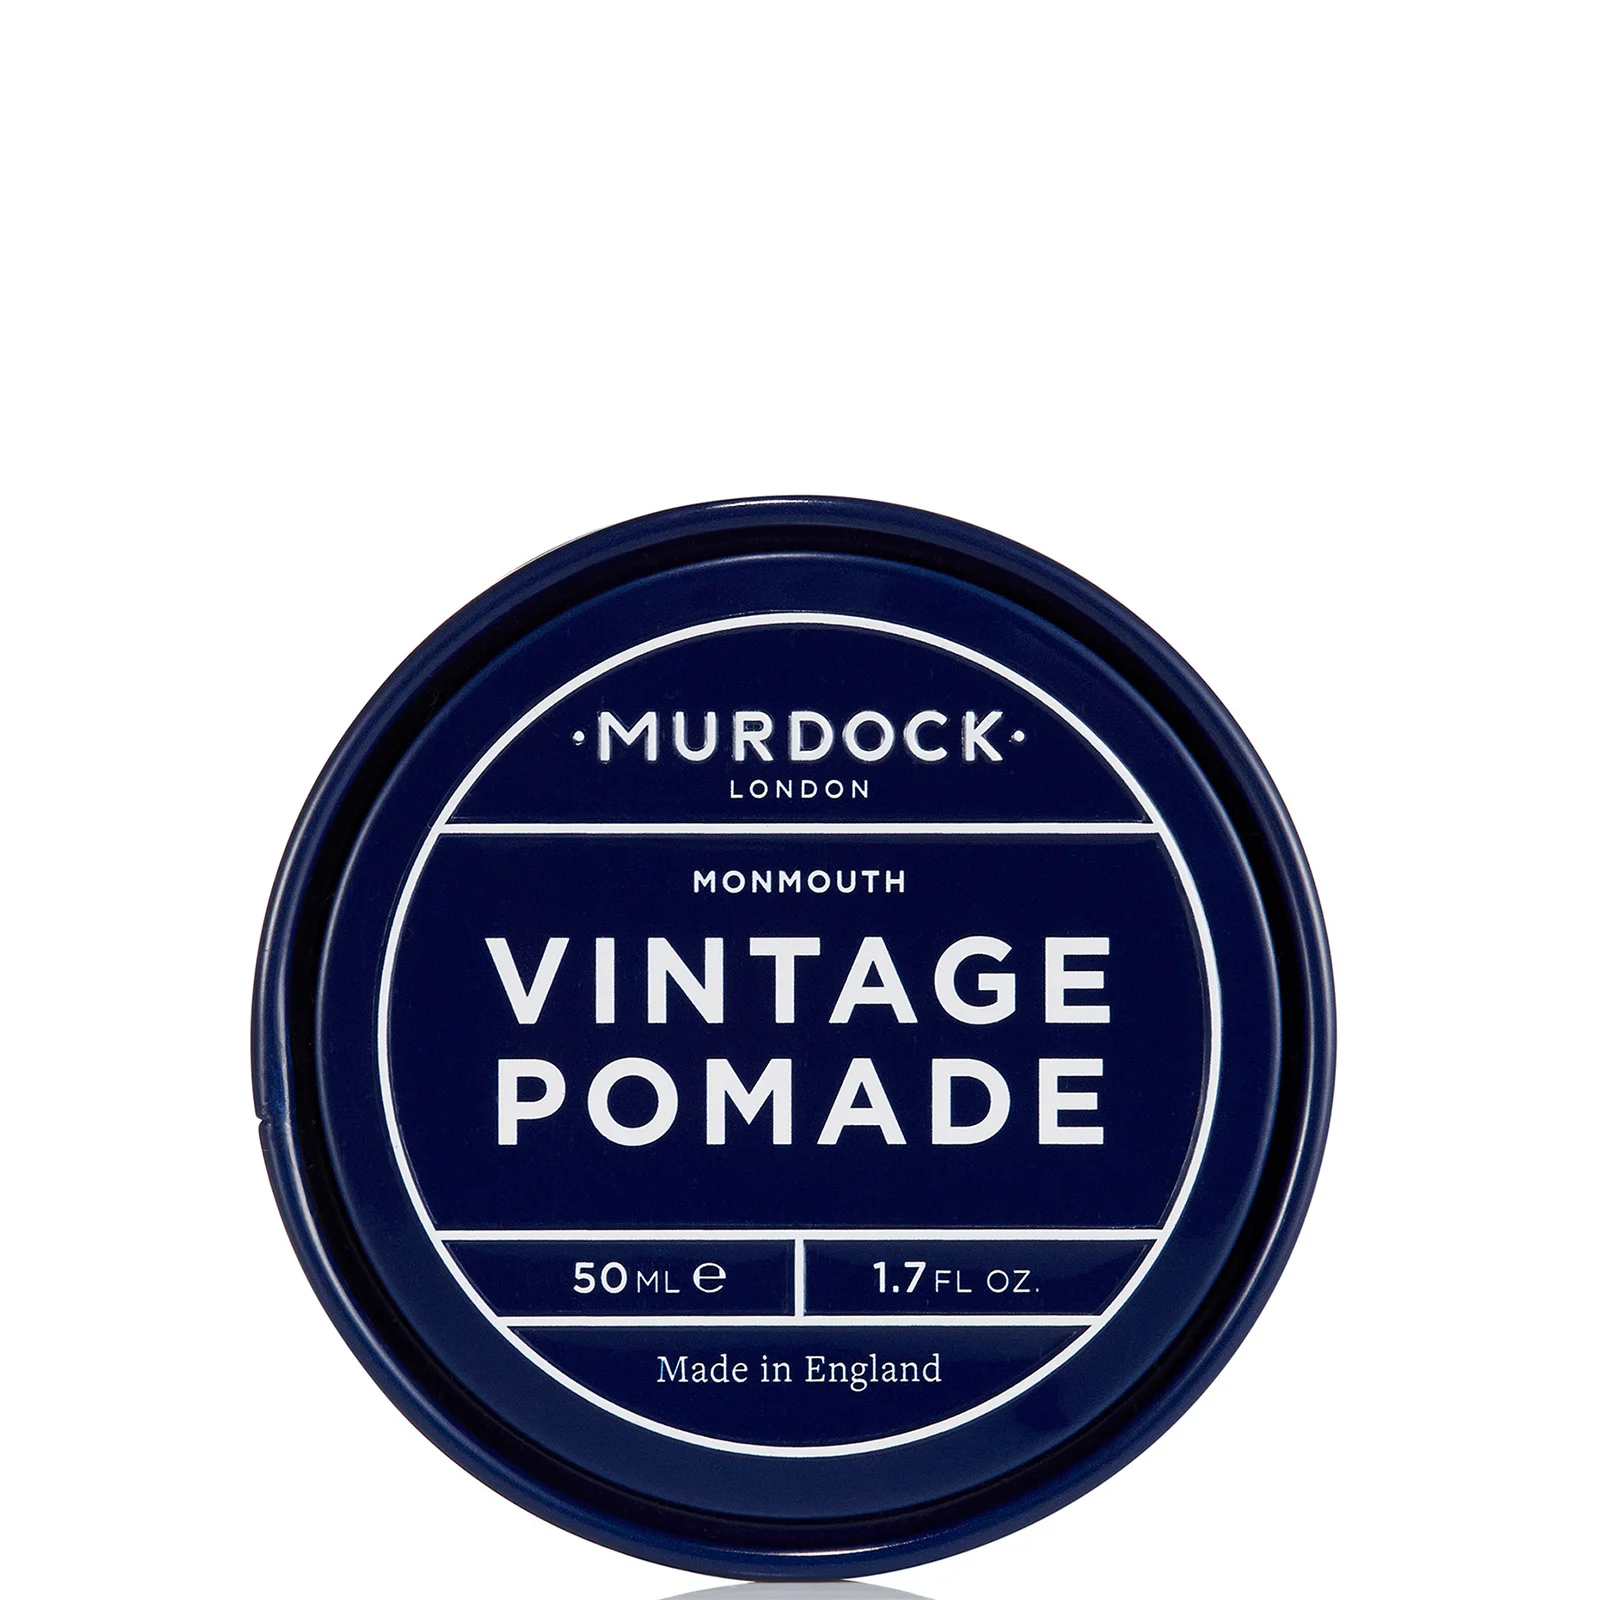 Murdock London Vintage Pomade 50ml Image 1